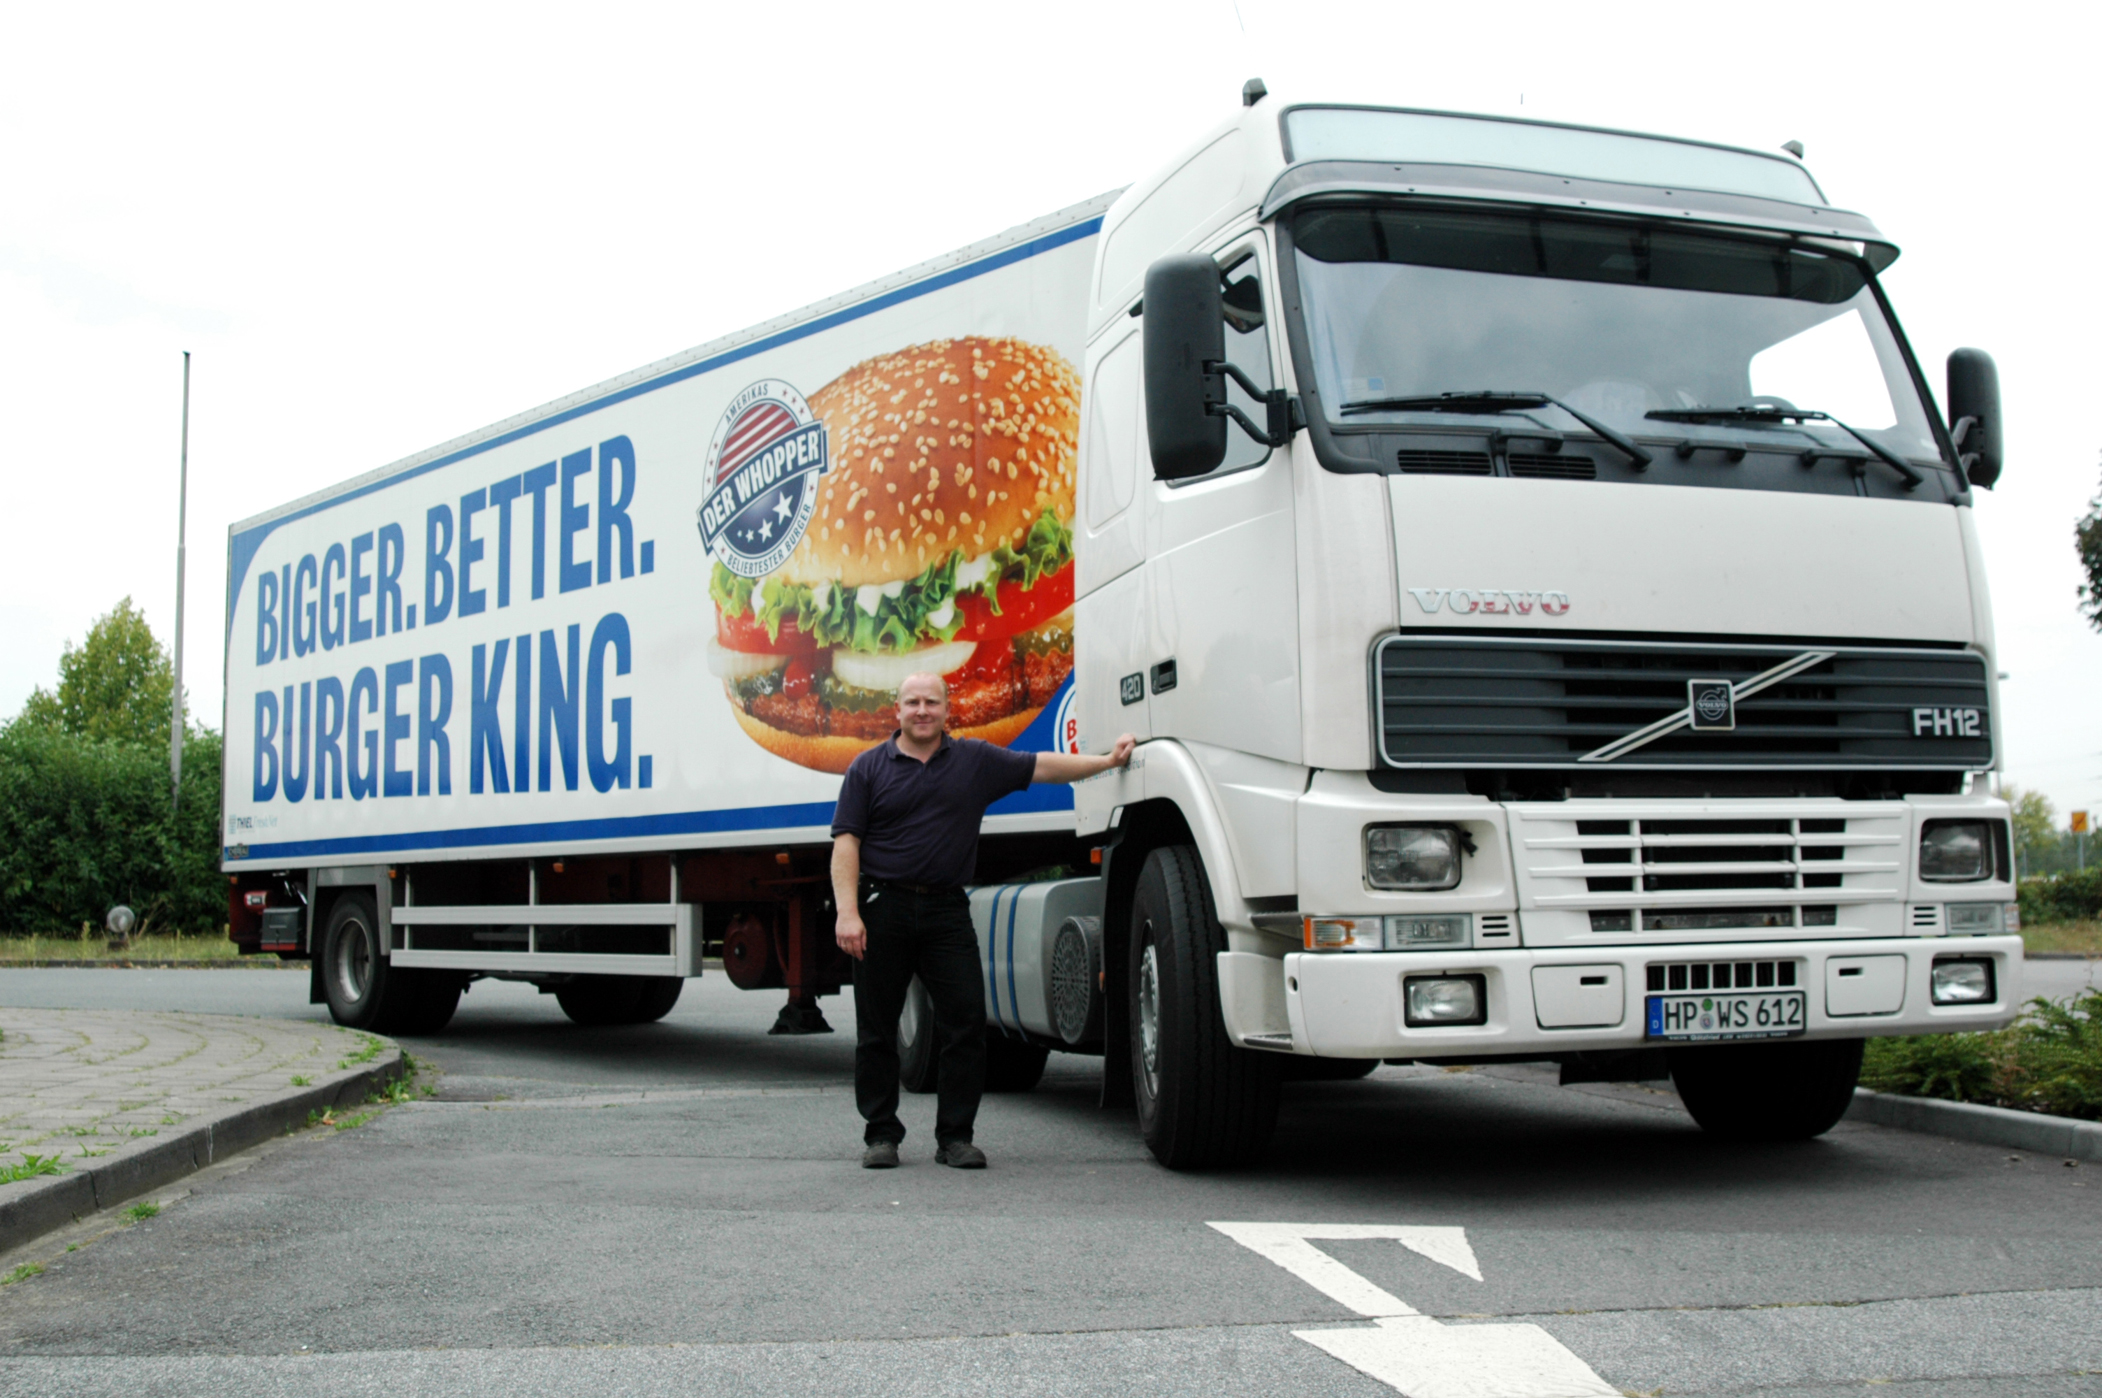 Bigger, better, Burger King